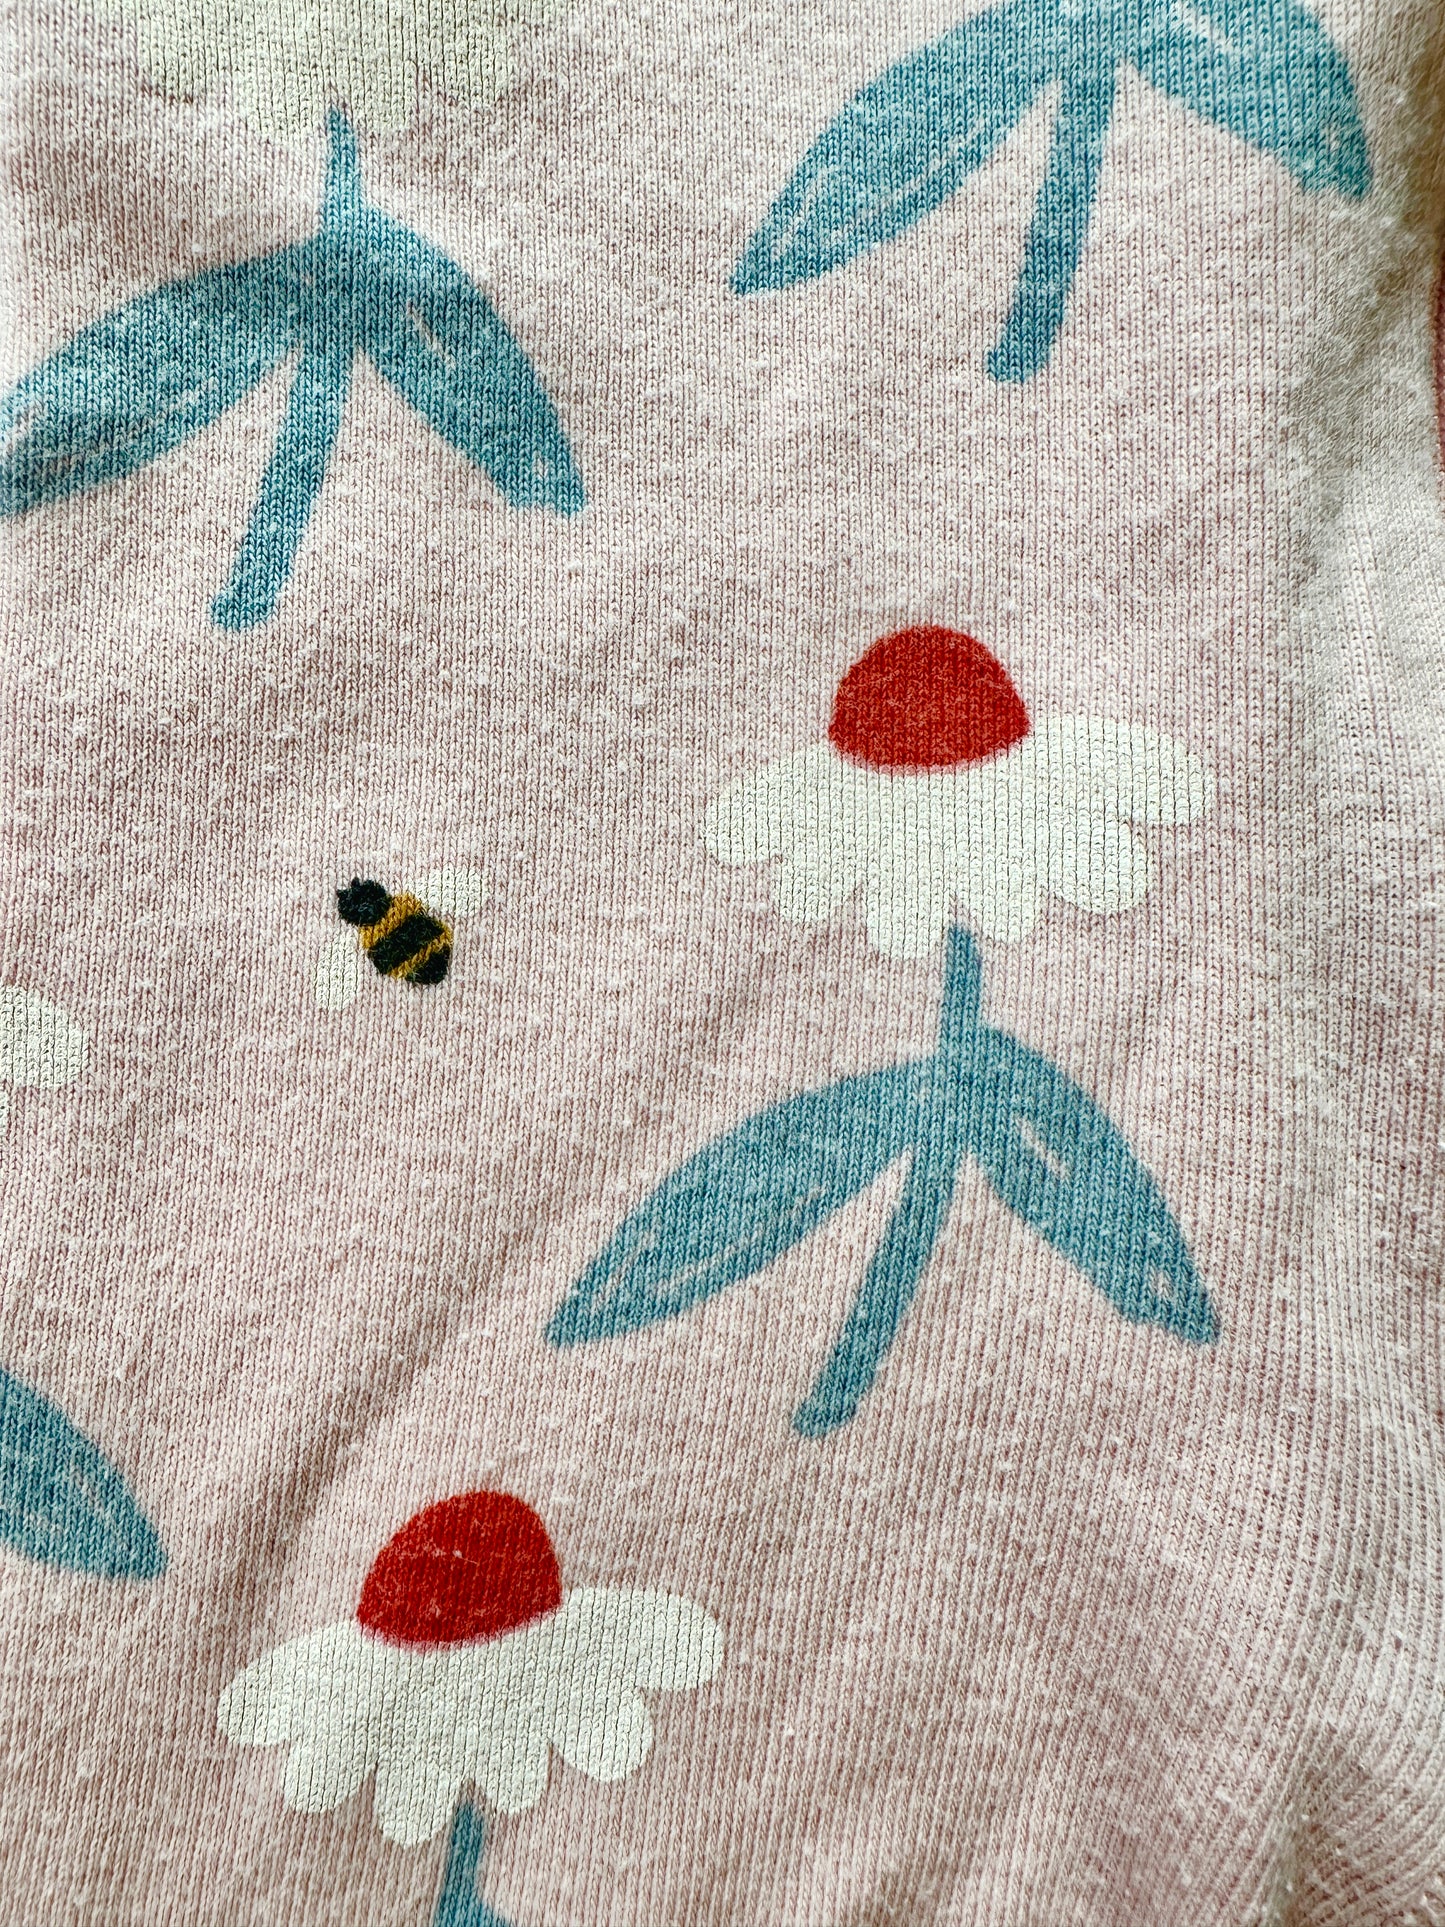 Girl 18-24 months Hanna Andersson flower & 🐝 print sleeper pajamas